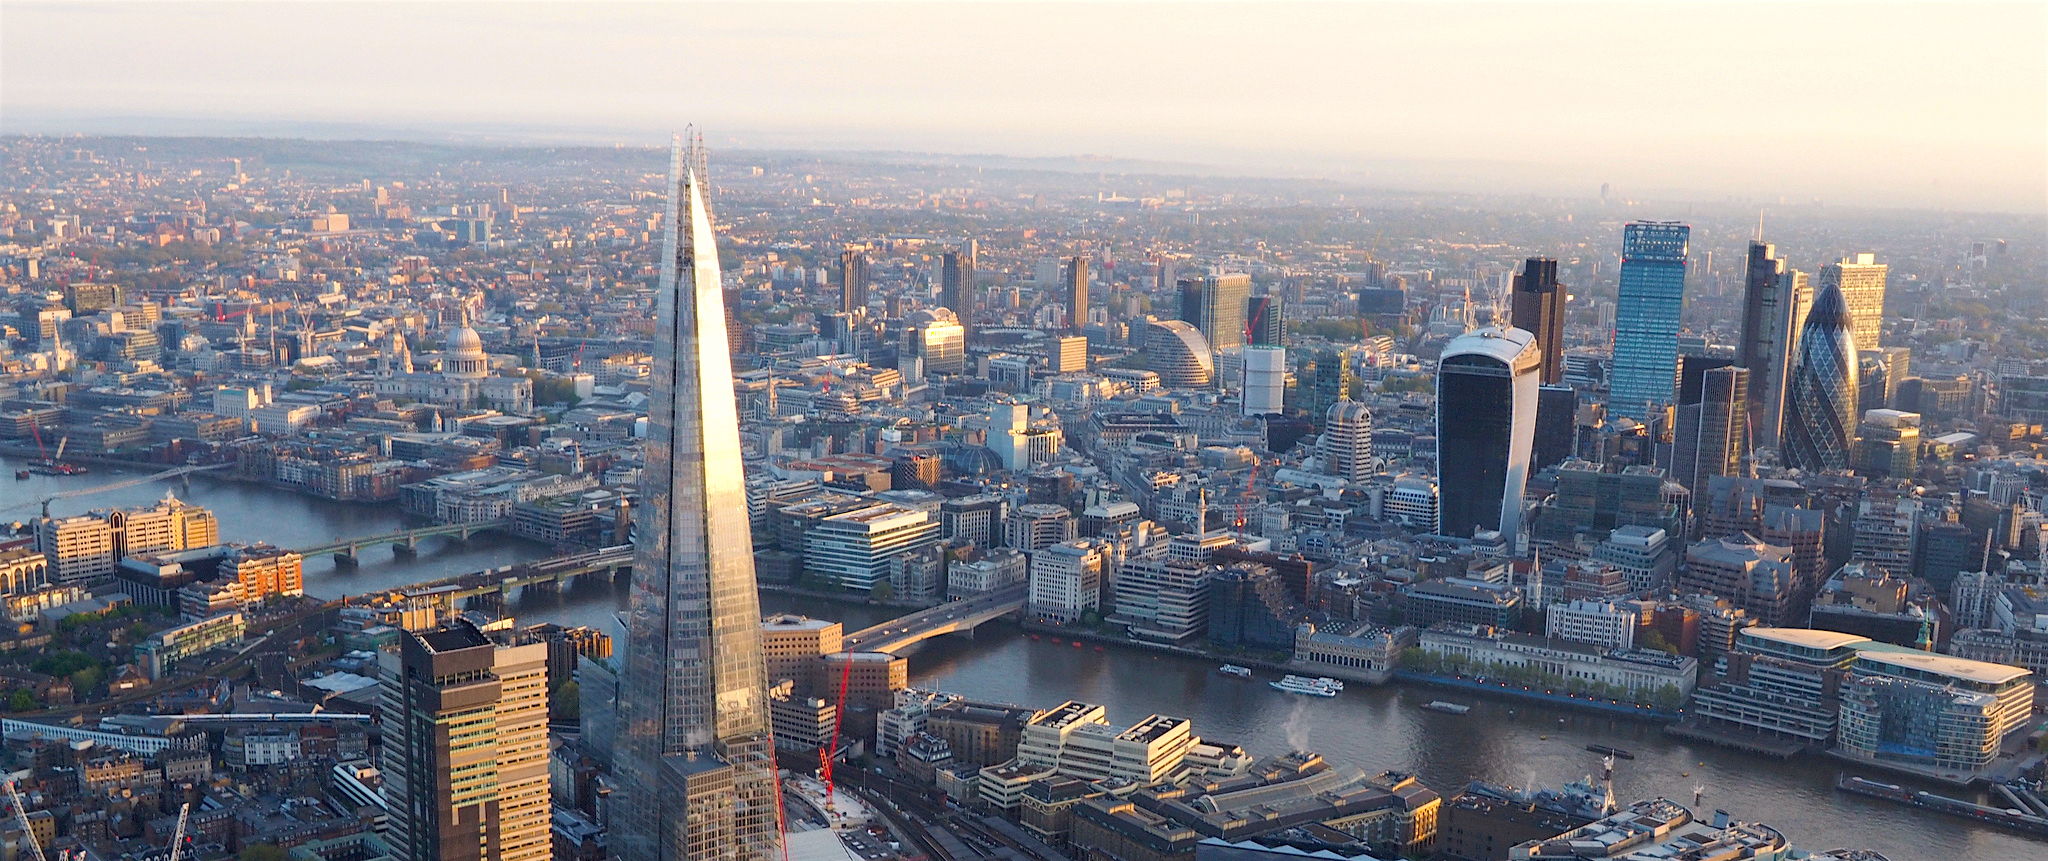 London Skyline Image